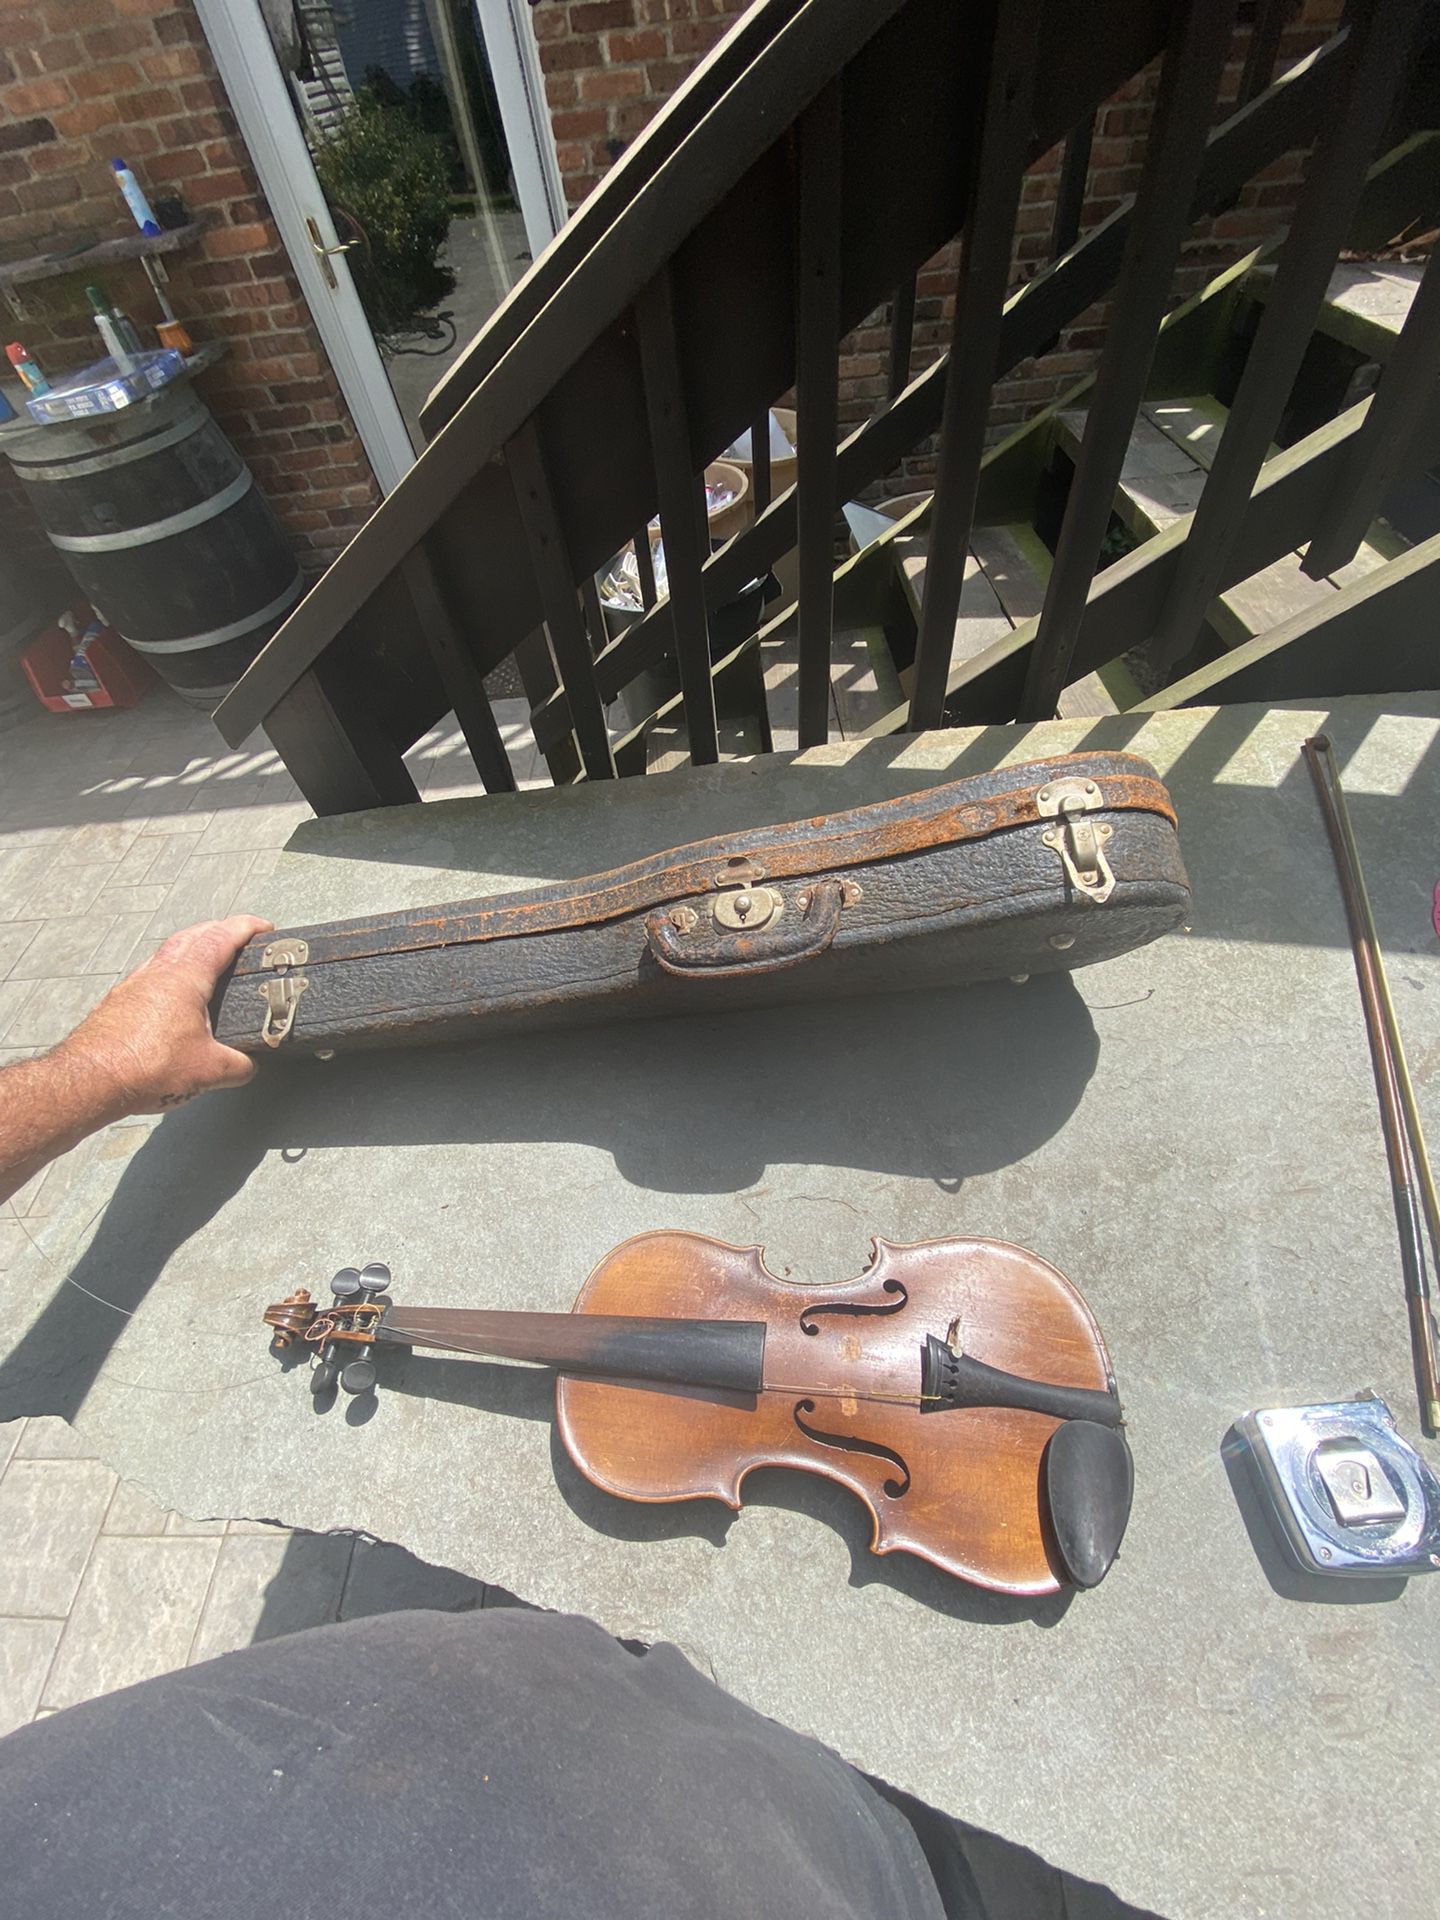 Violin made in Czechoslovakia Antonio a Stradivarius